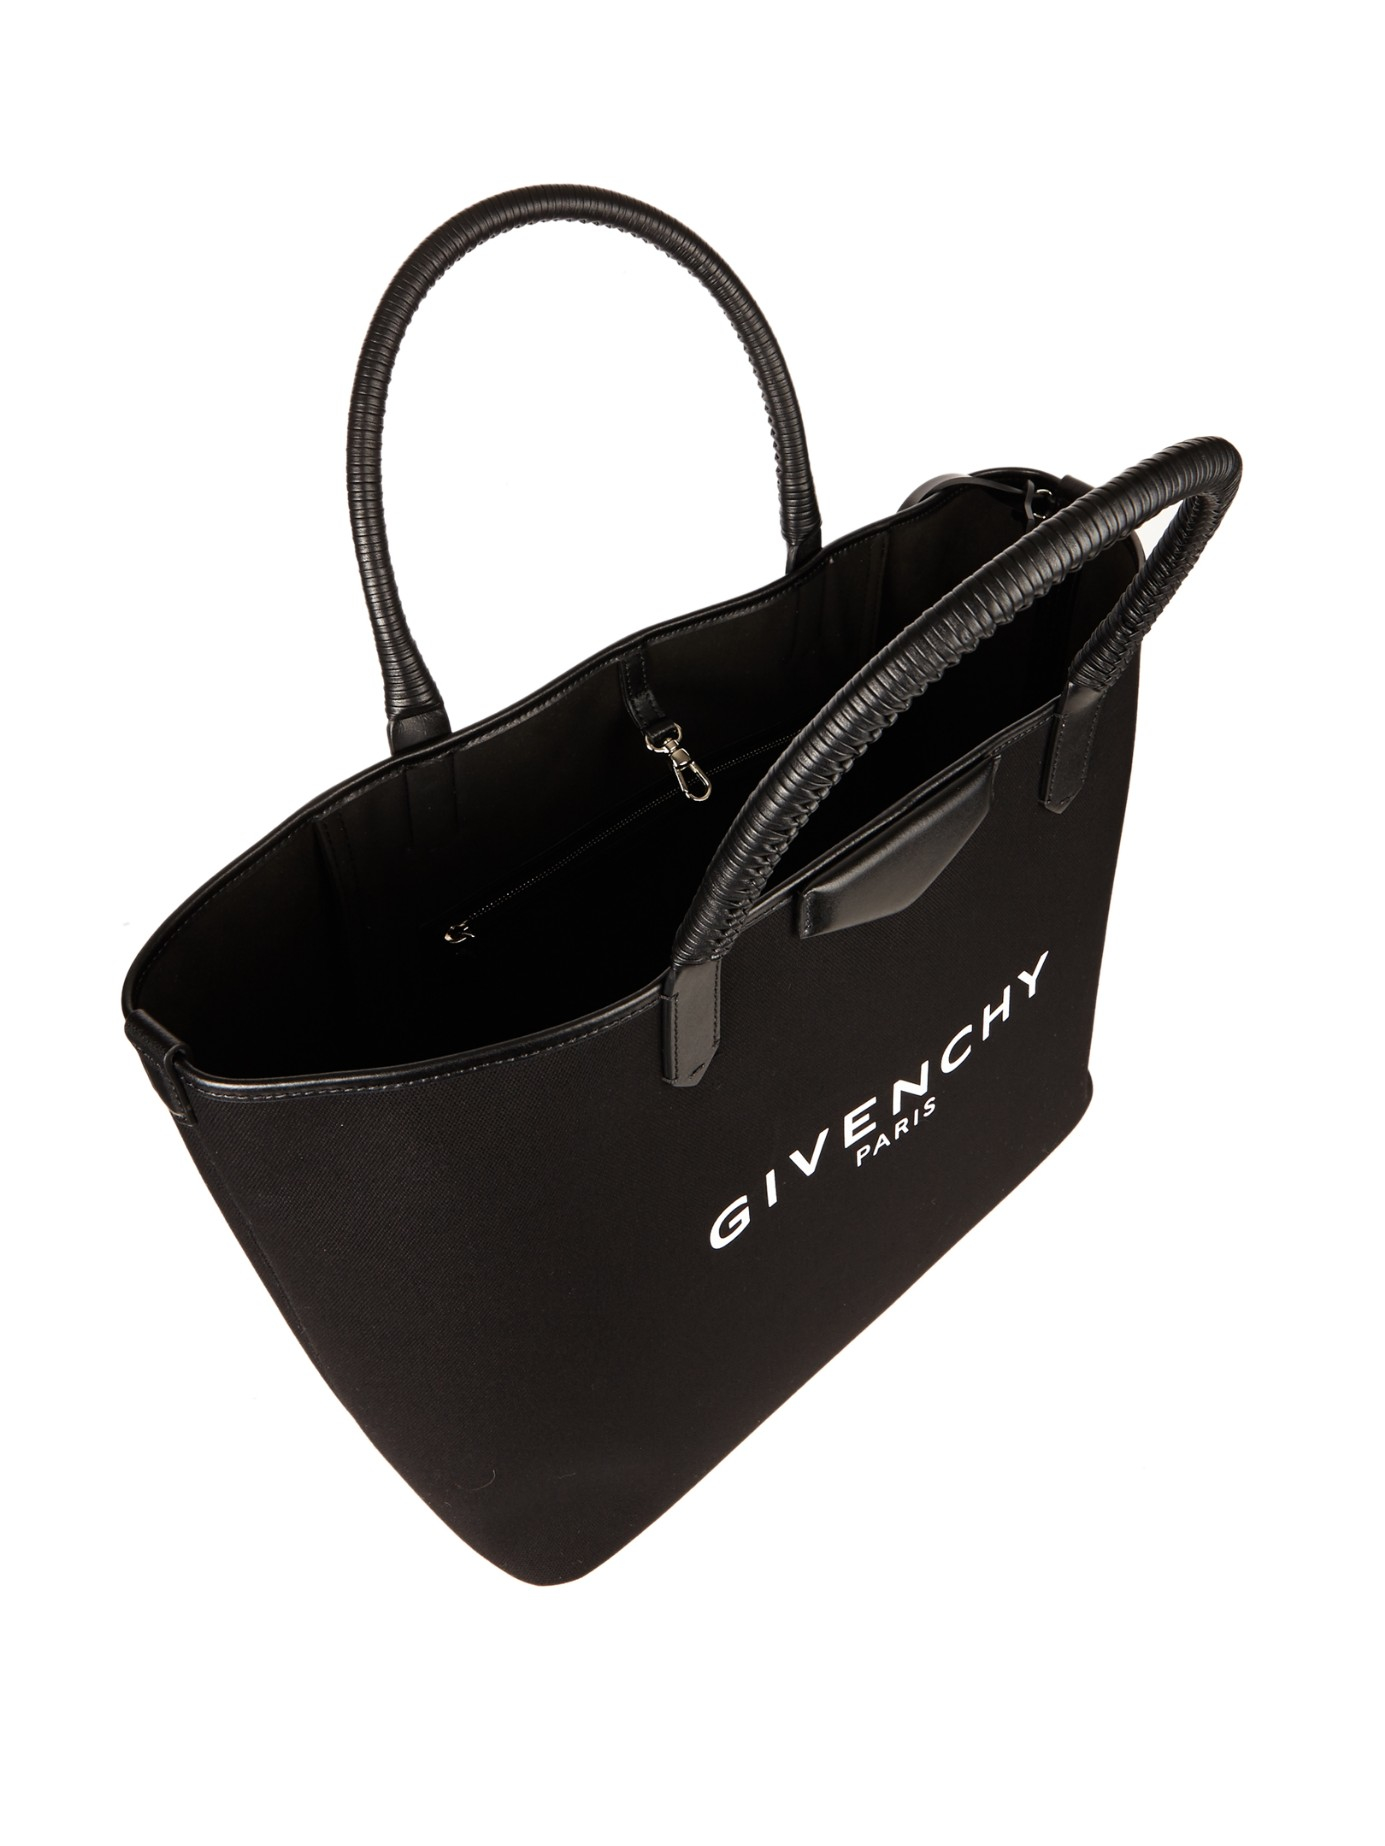 Givenchy Large Antigona Tote Bag - Farfetch